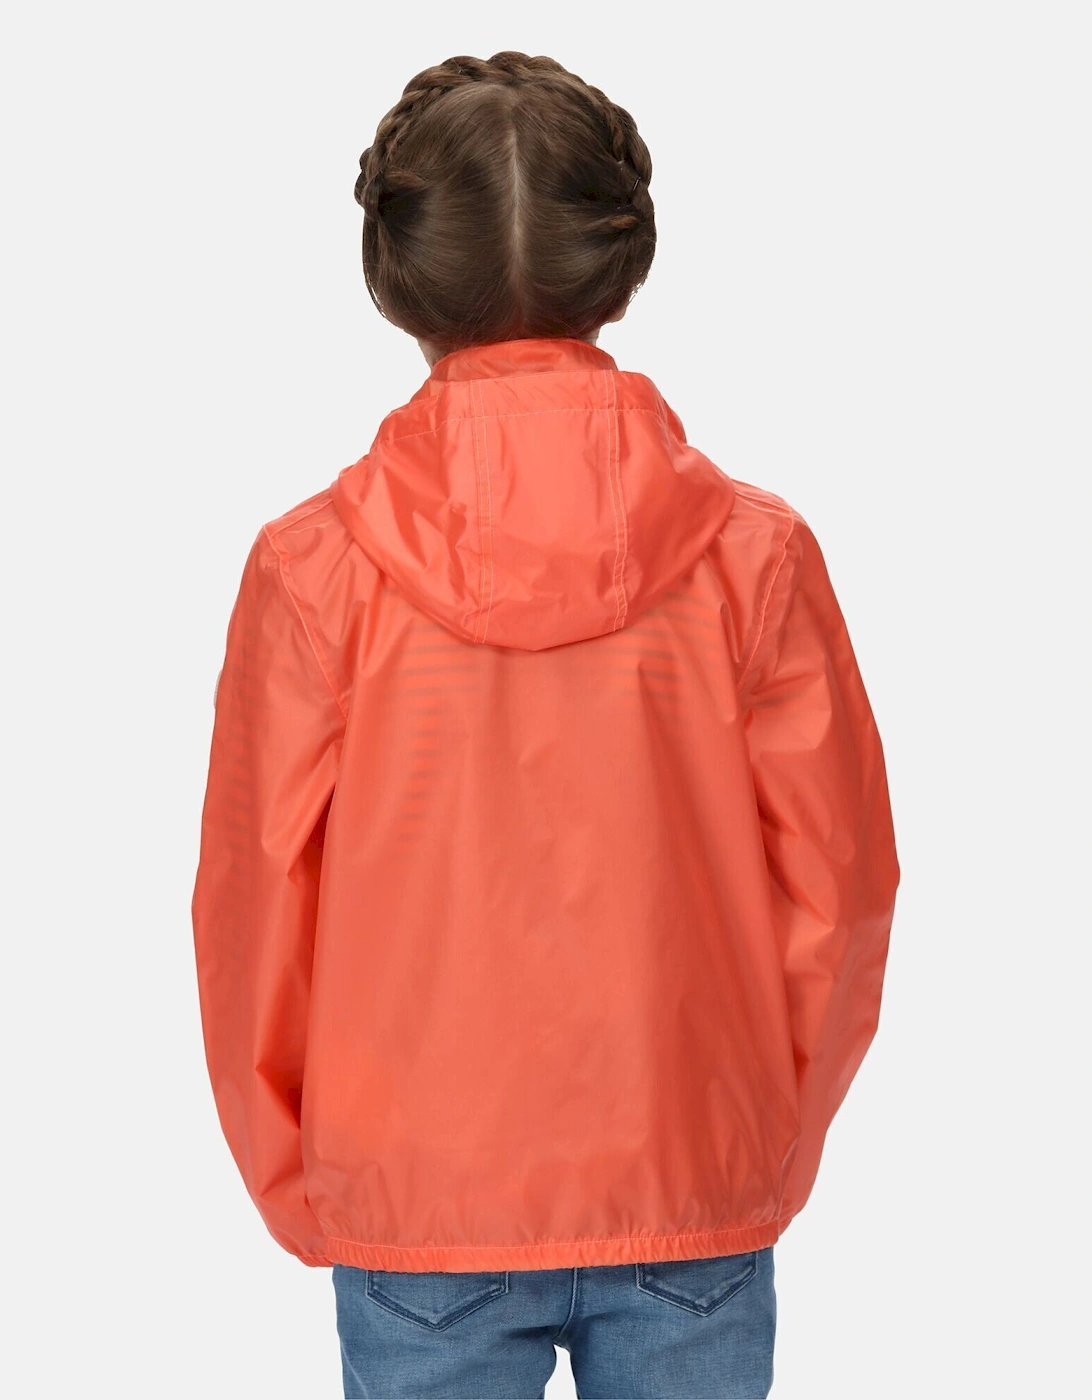 Childrens/Kids Catkin Waterproof Jacket